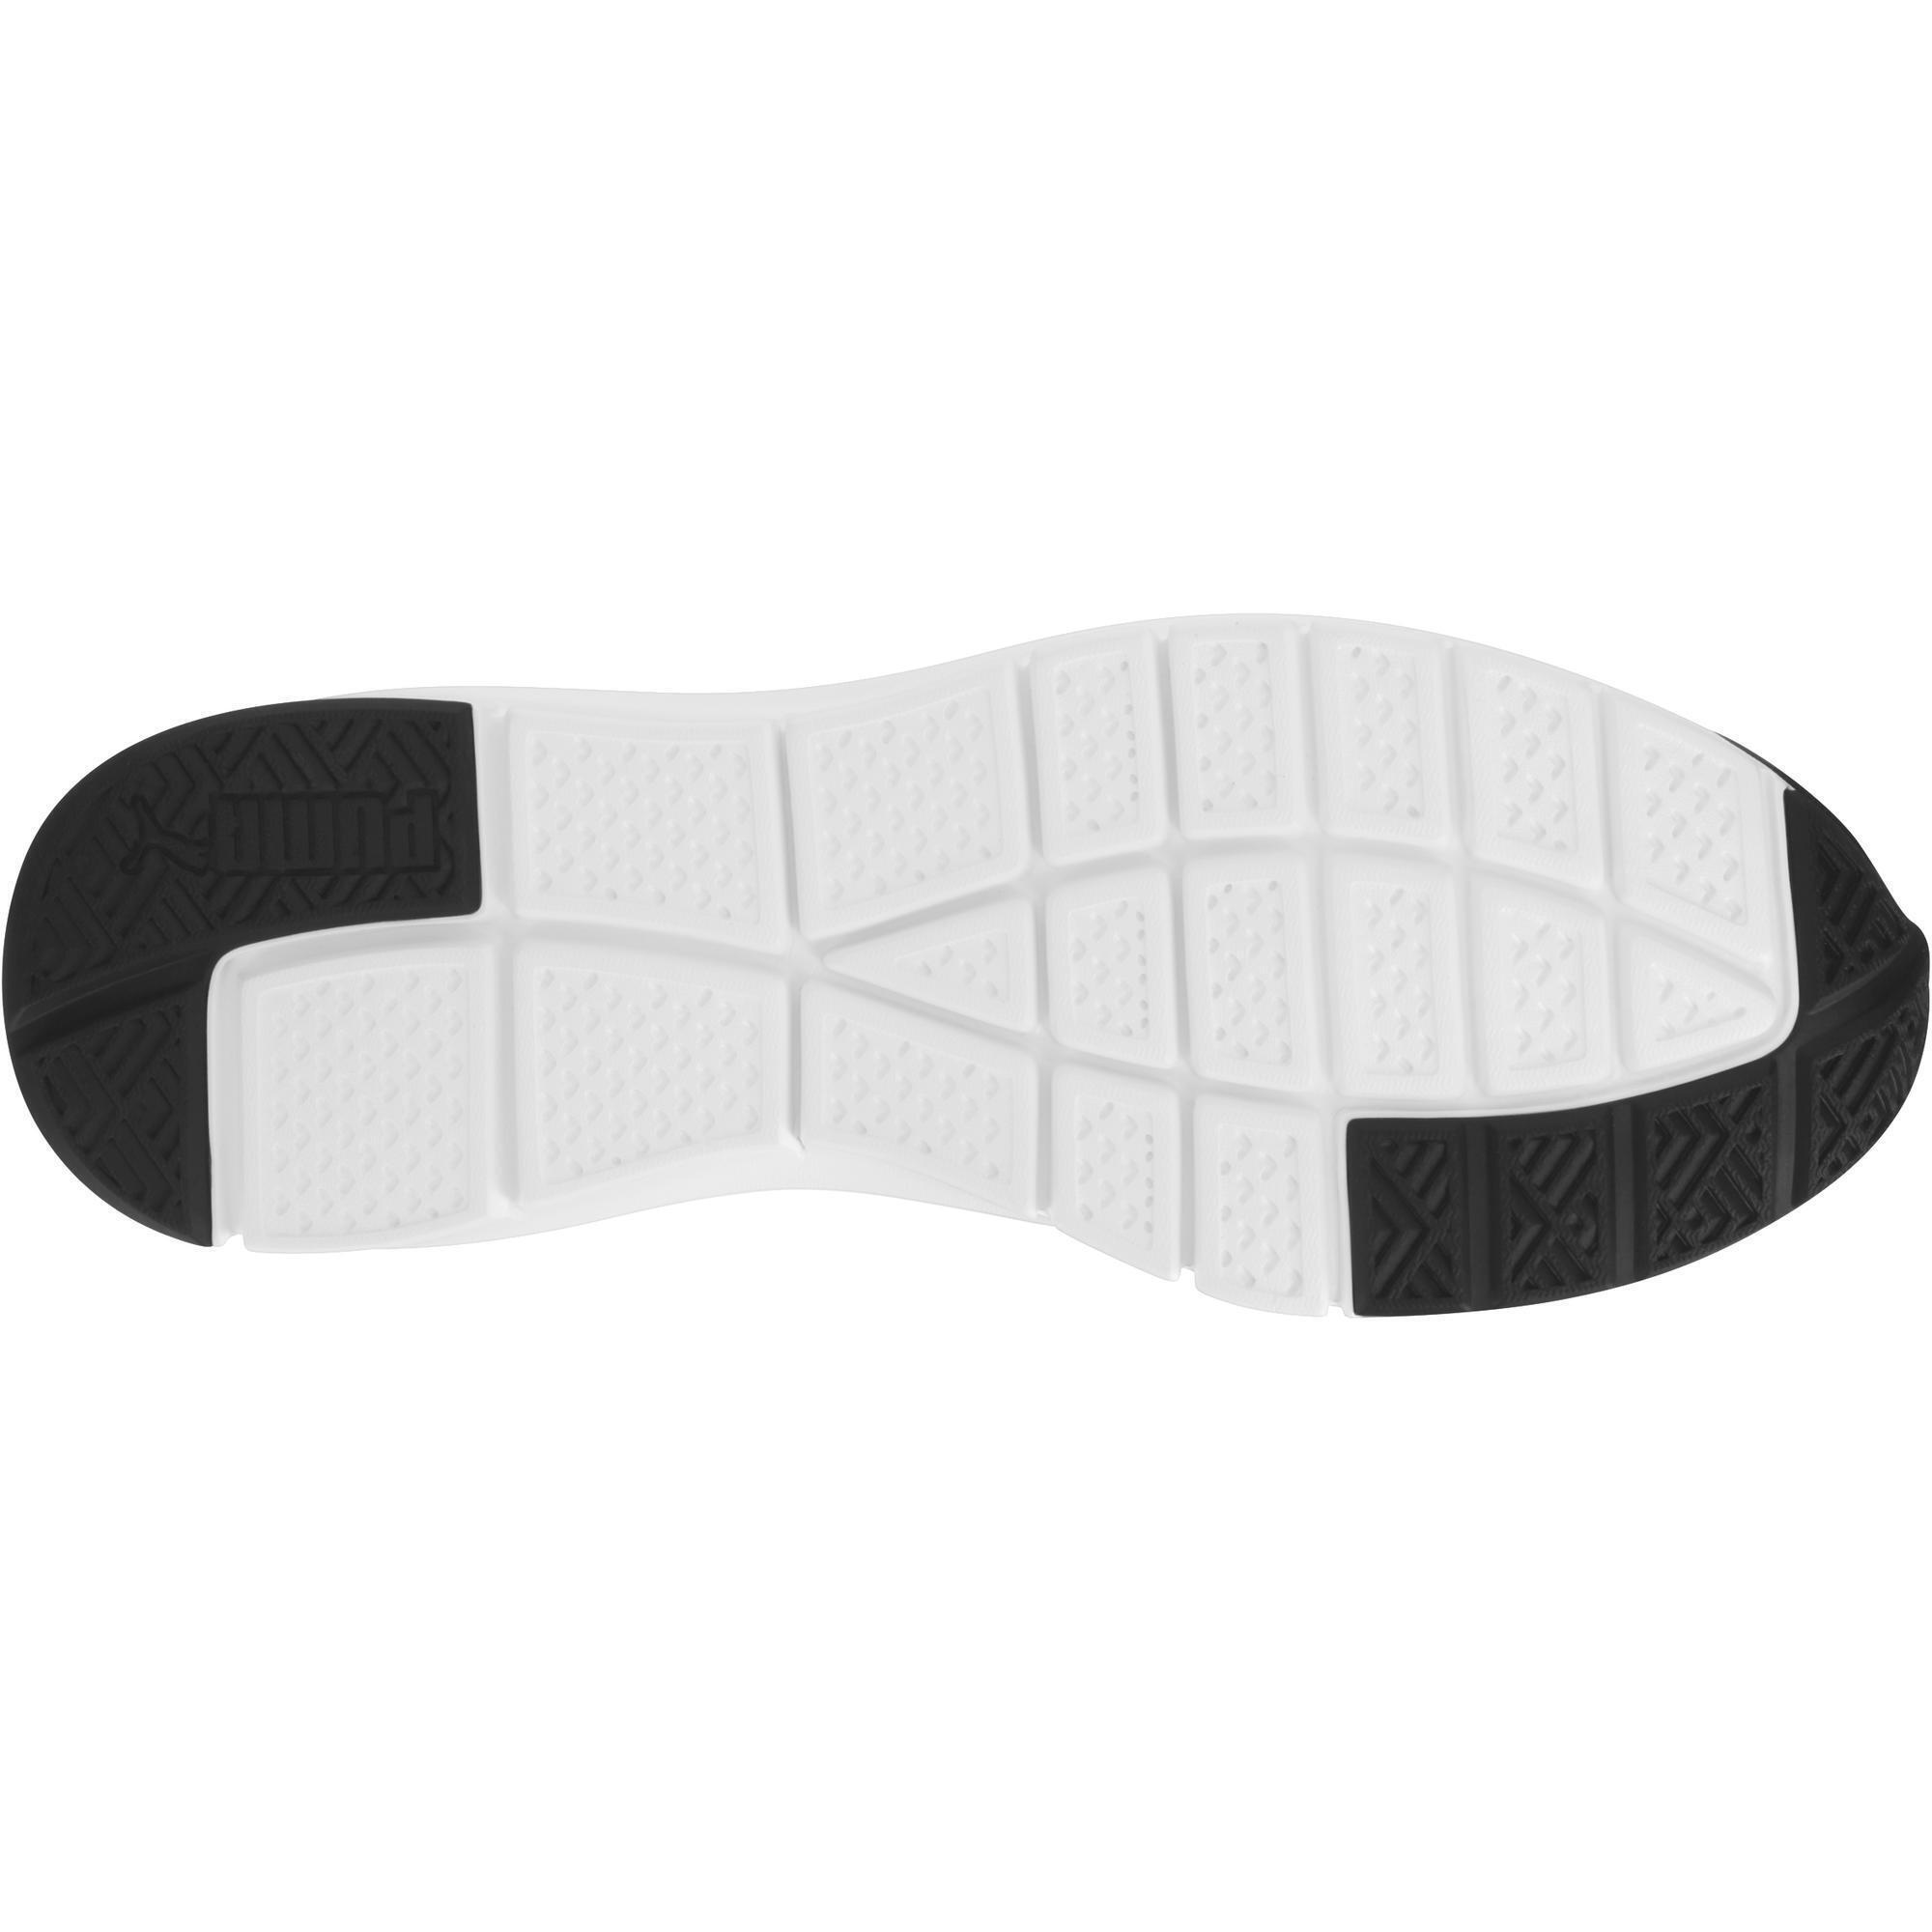 Flexracer men's active walking shoes - black 7/9